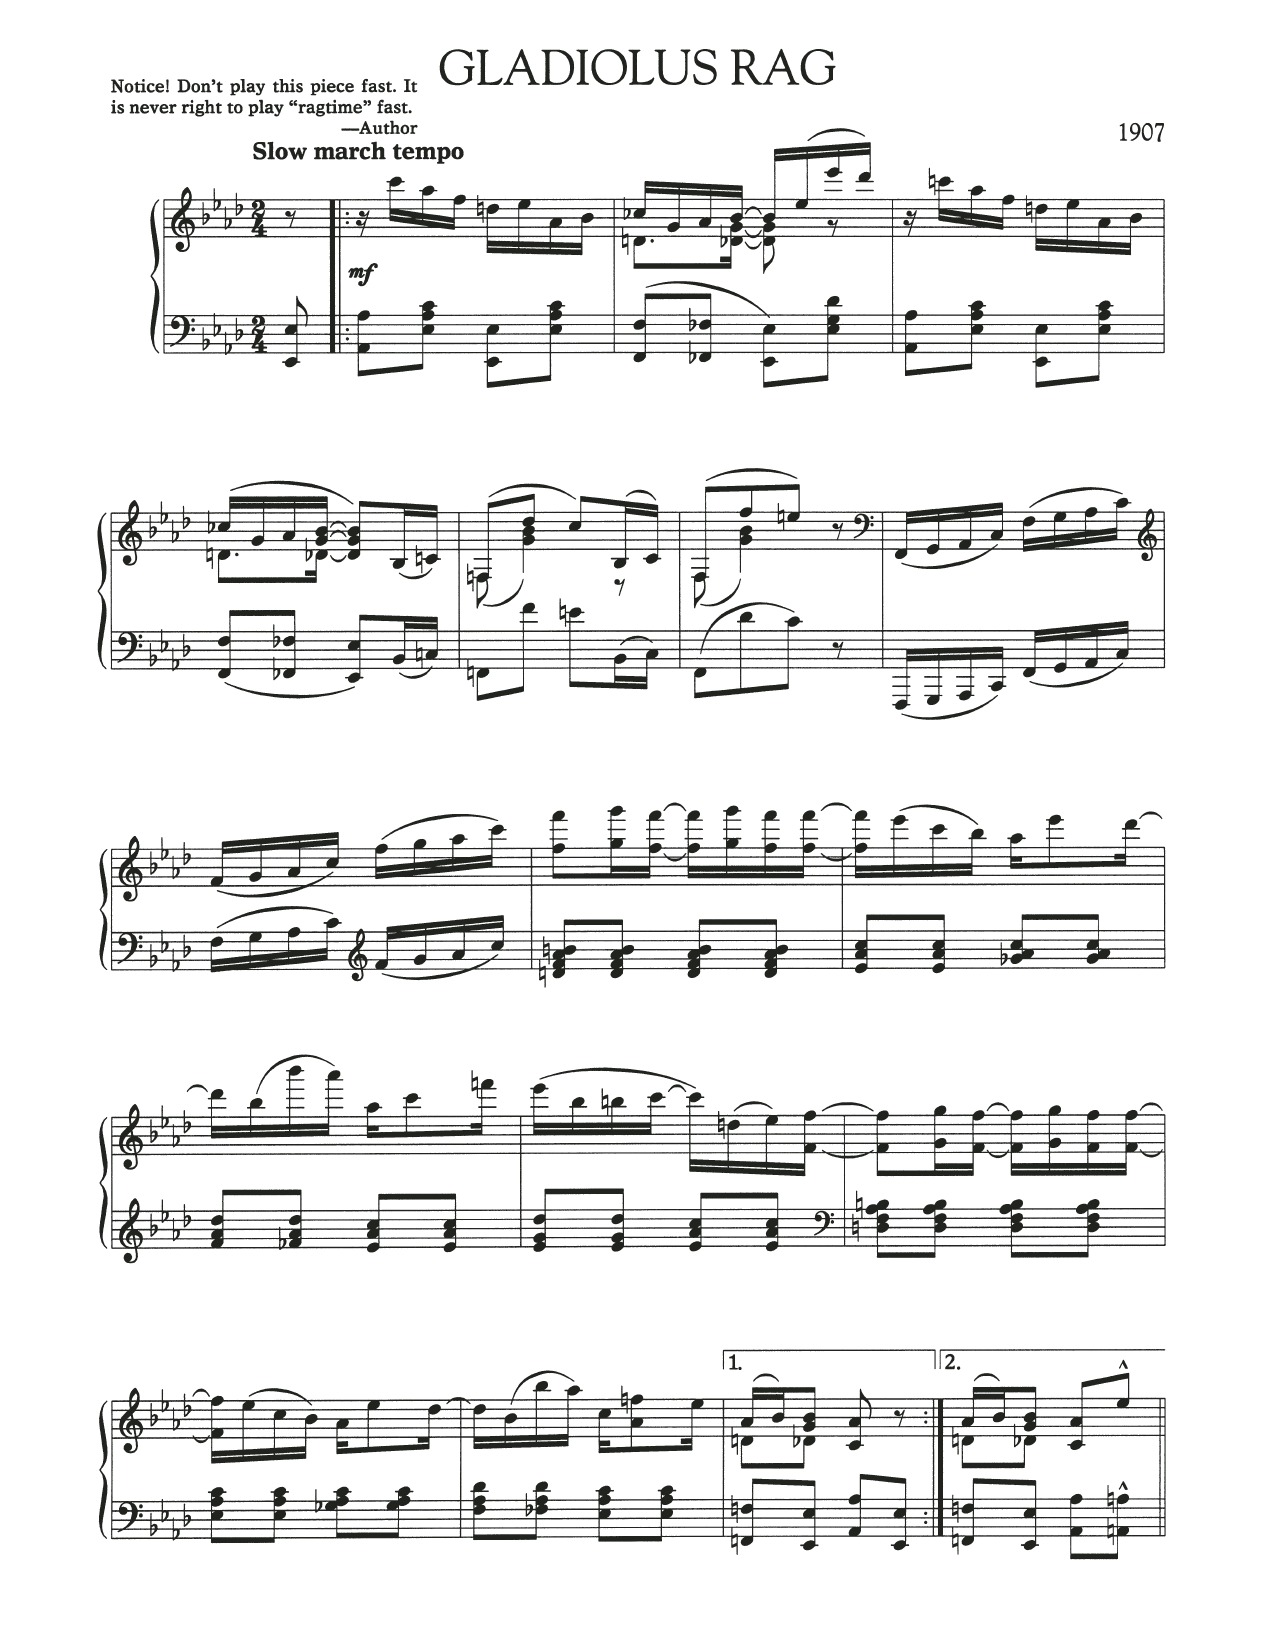 Scott Joplin Gladiolus Rag Sheet Music Notes & Chords for Piano Solo - Download or Print PDF